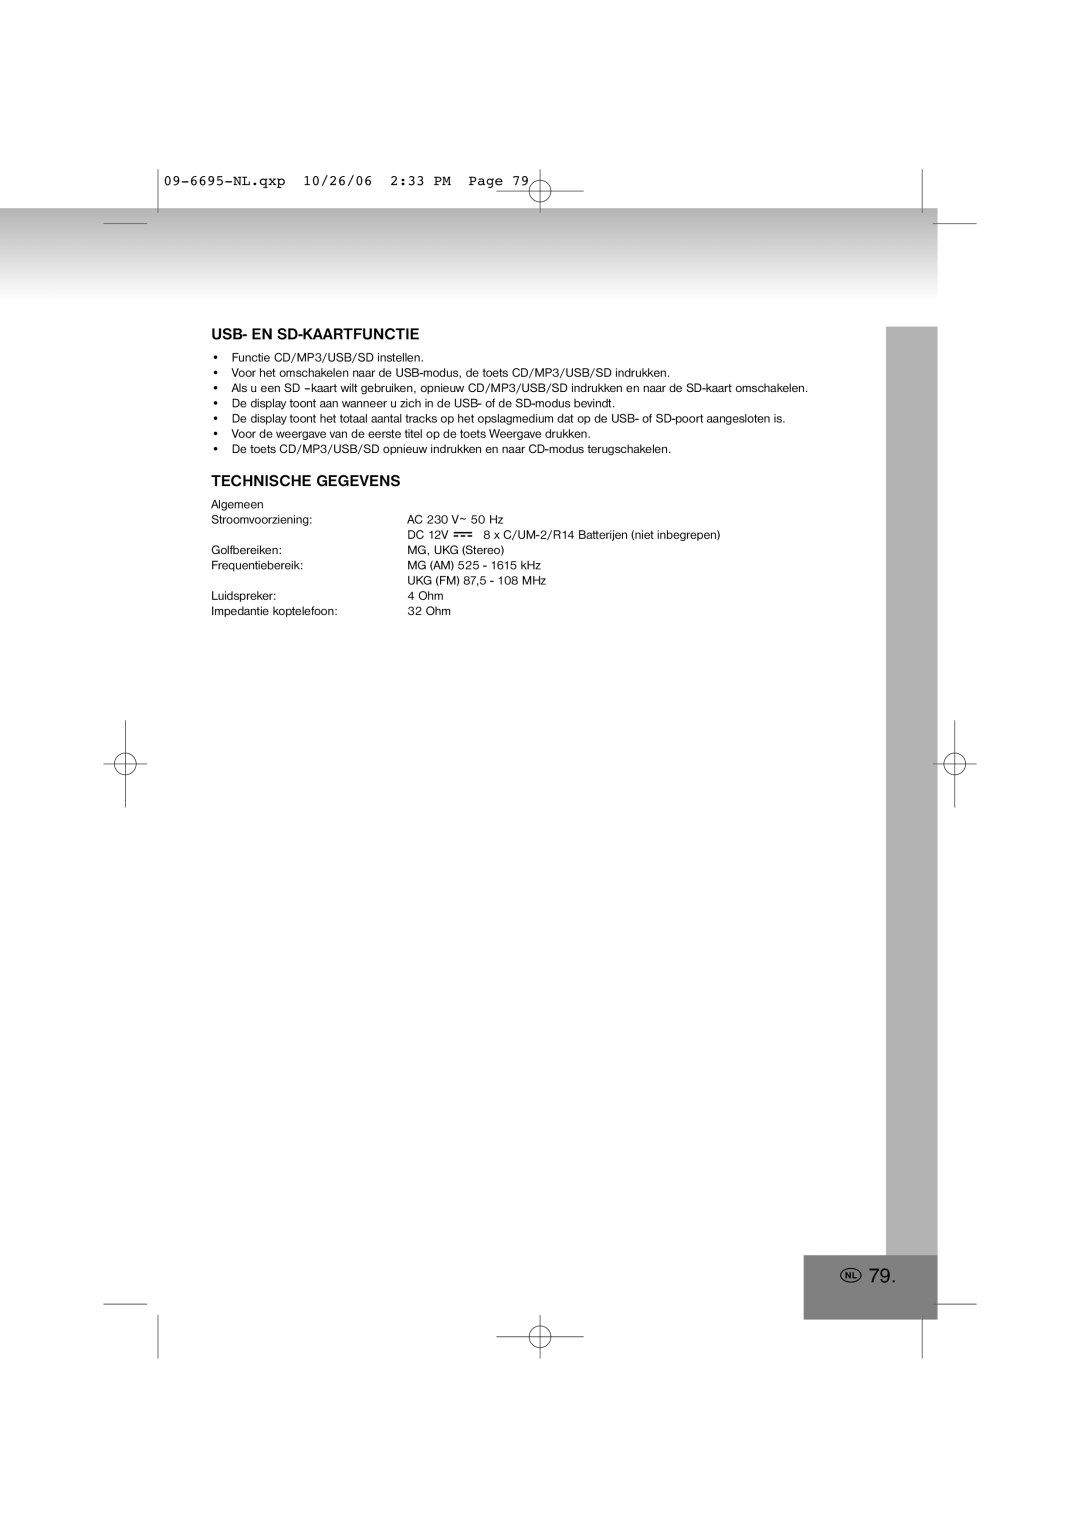 Elta manual Usb- En Sd-Kaartfunctie, Technische Gegevens, 09-6695-NL.qxp10/26/06 2 33 PM Page 